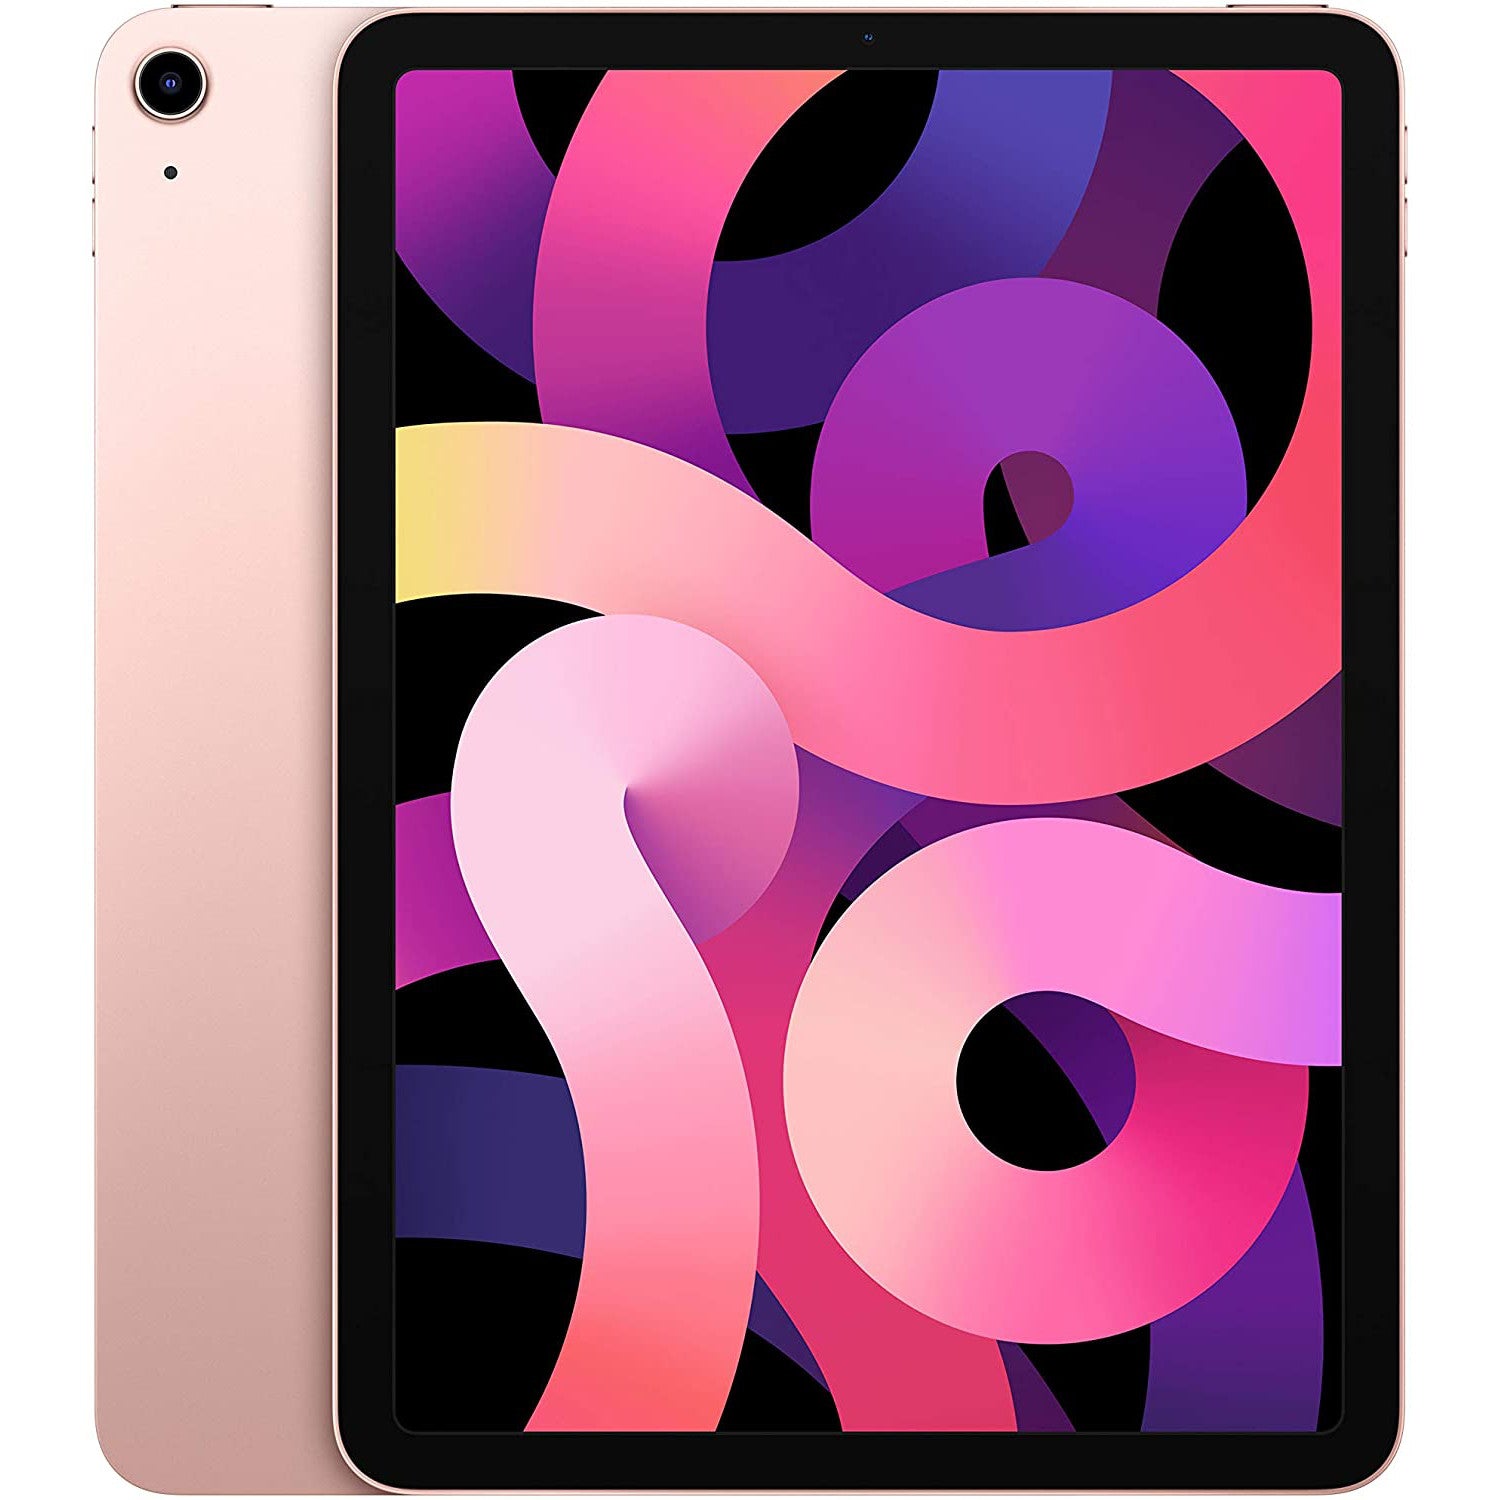 iPad Air 4 64GB WiFi - Gold Rose - Makellos